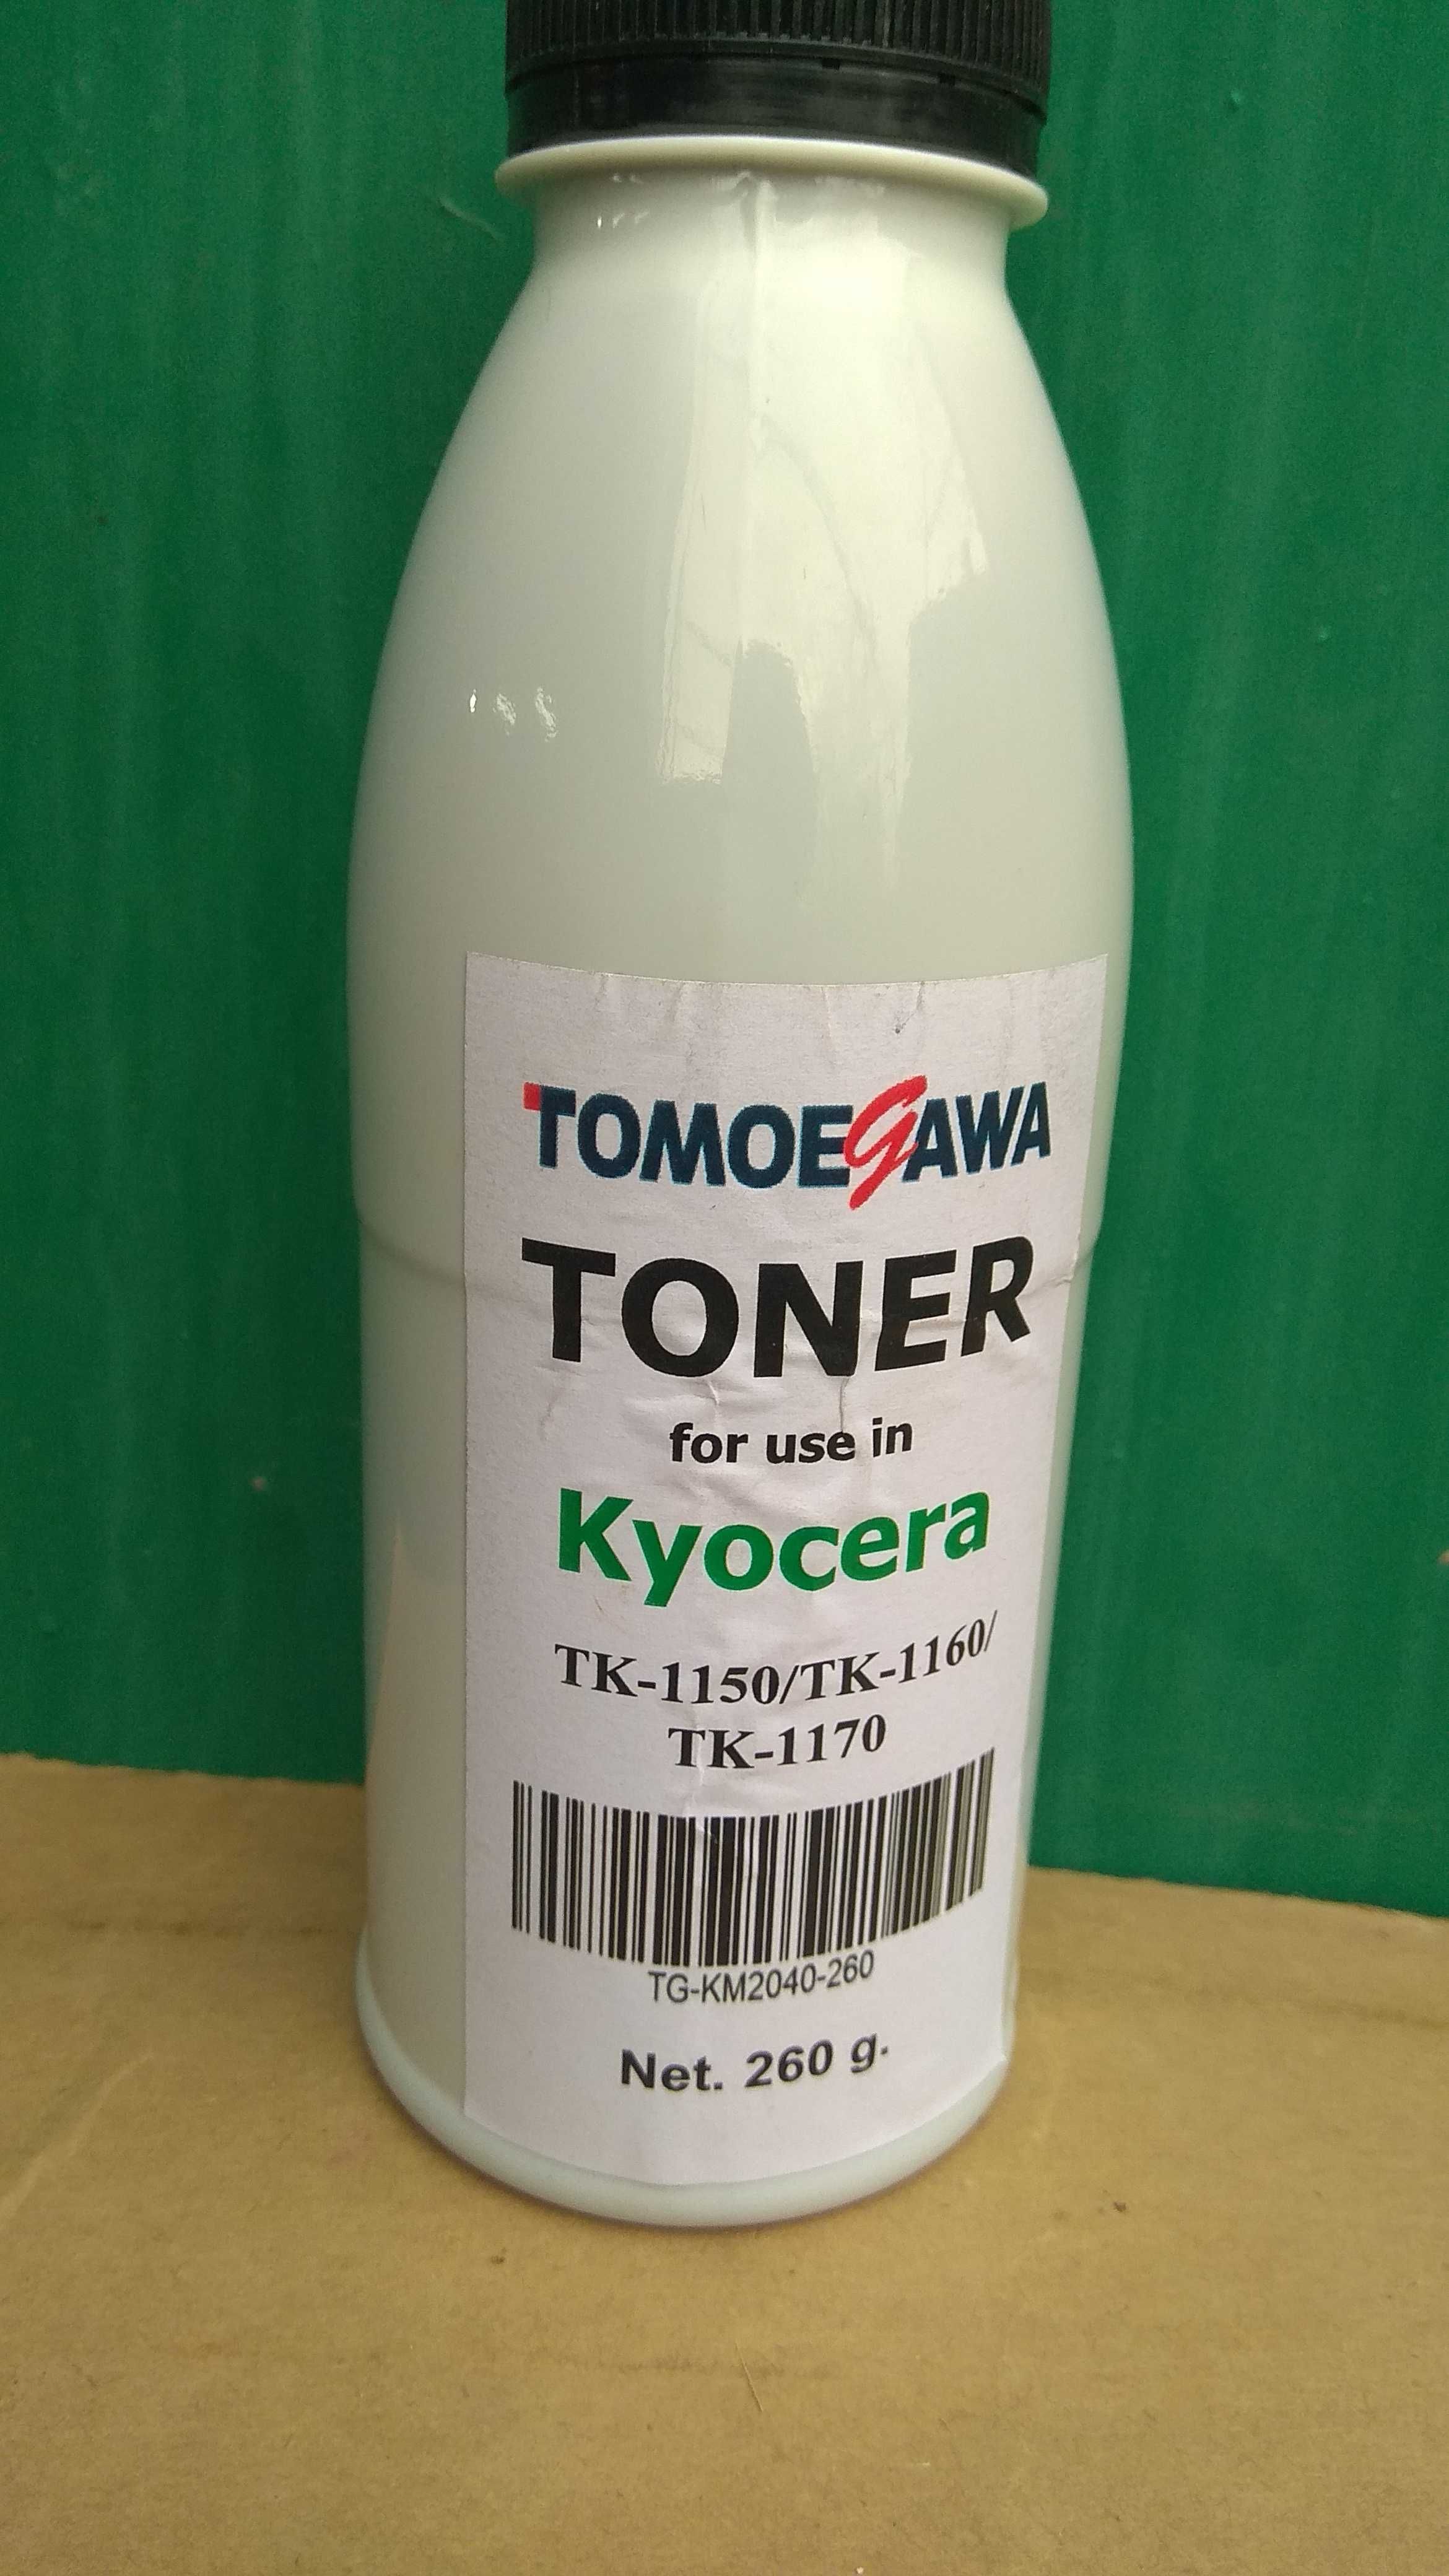 Тонер KYOCERA TK-1150/TK-1160/TK-1170  Tomoegawa